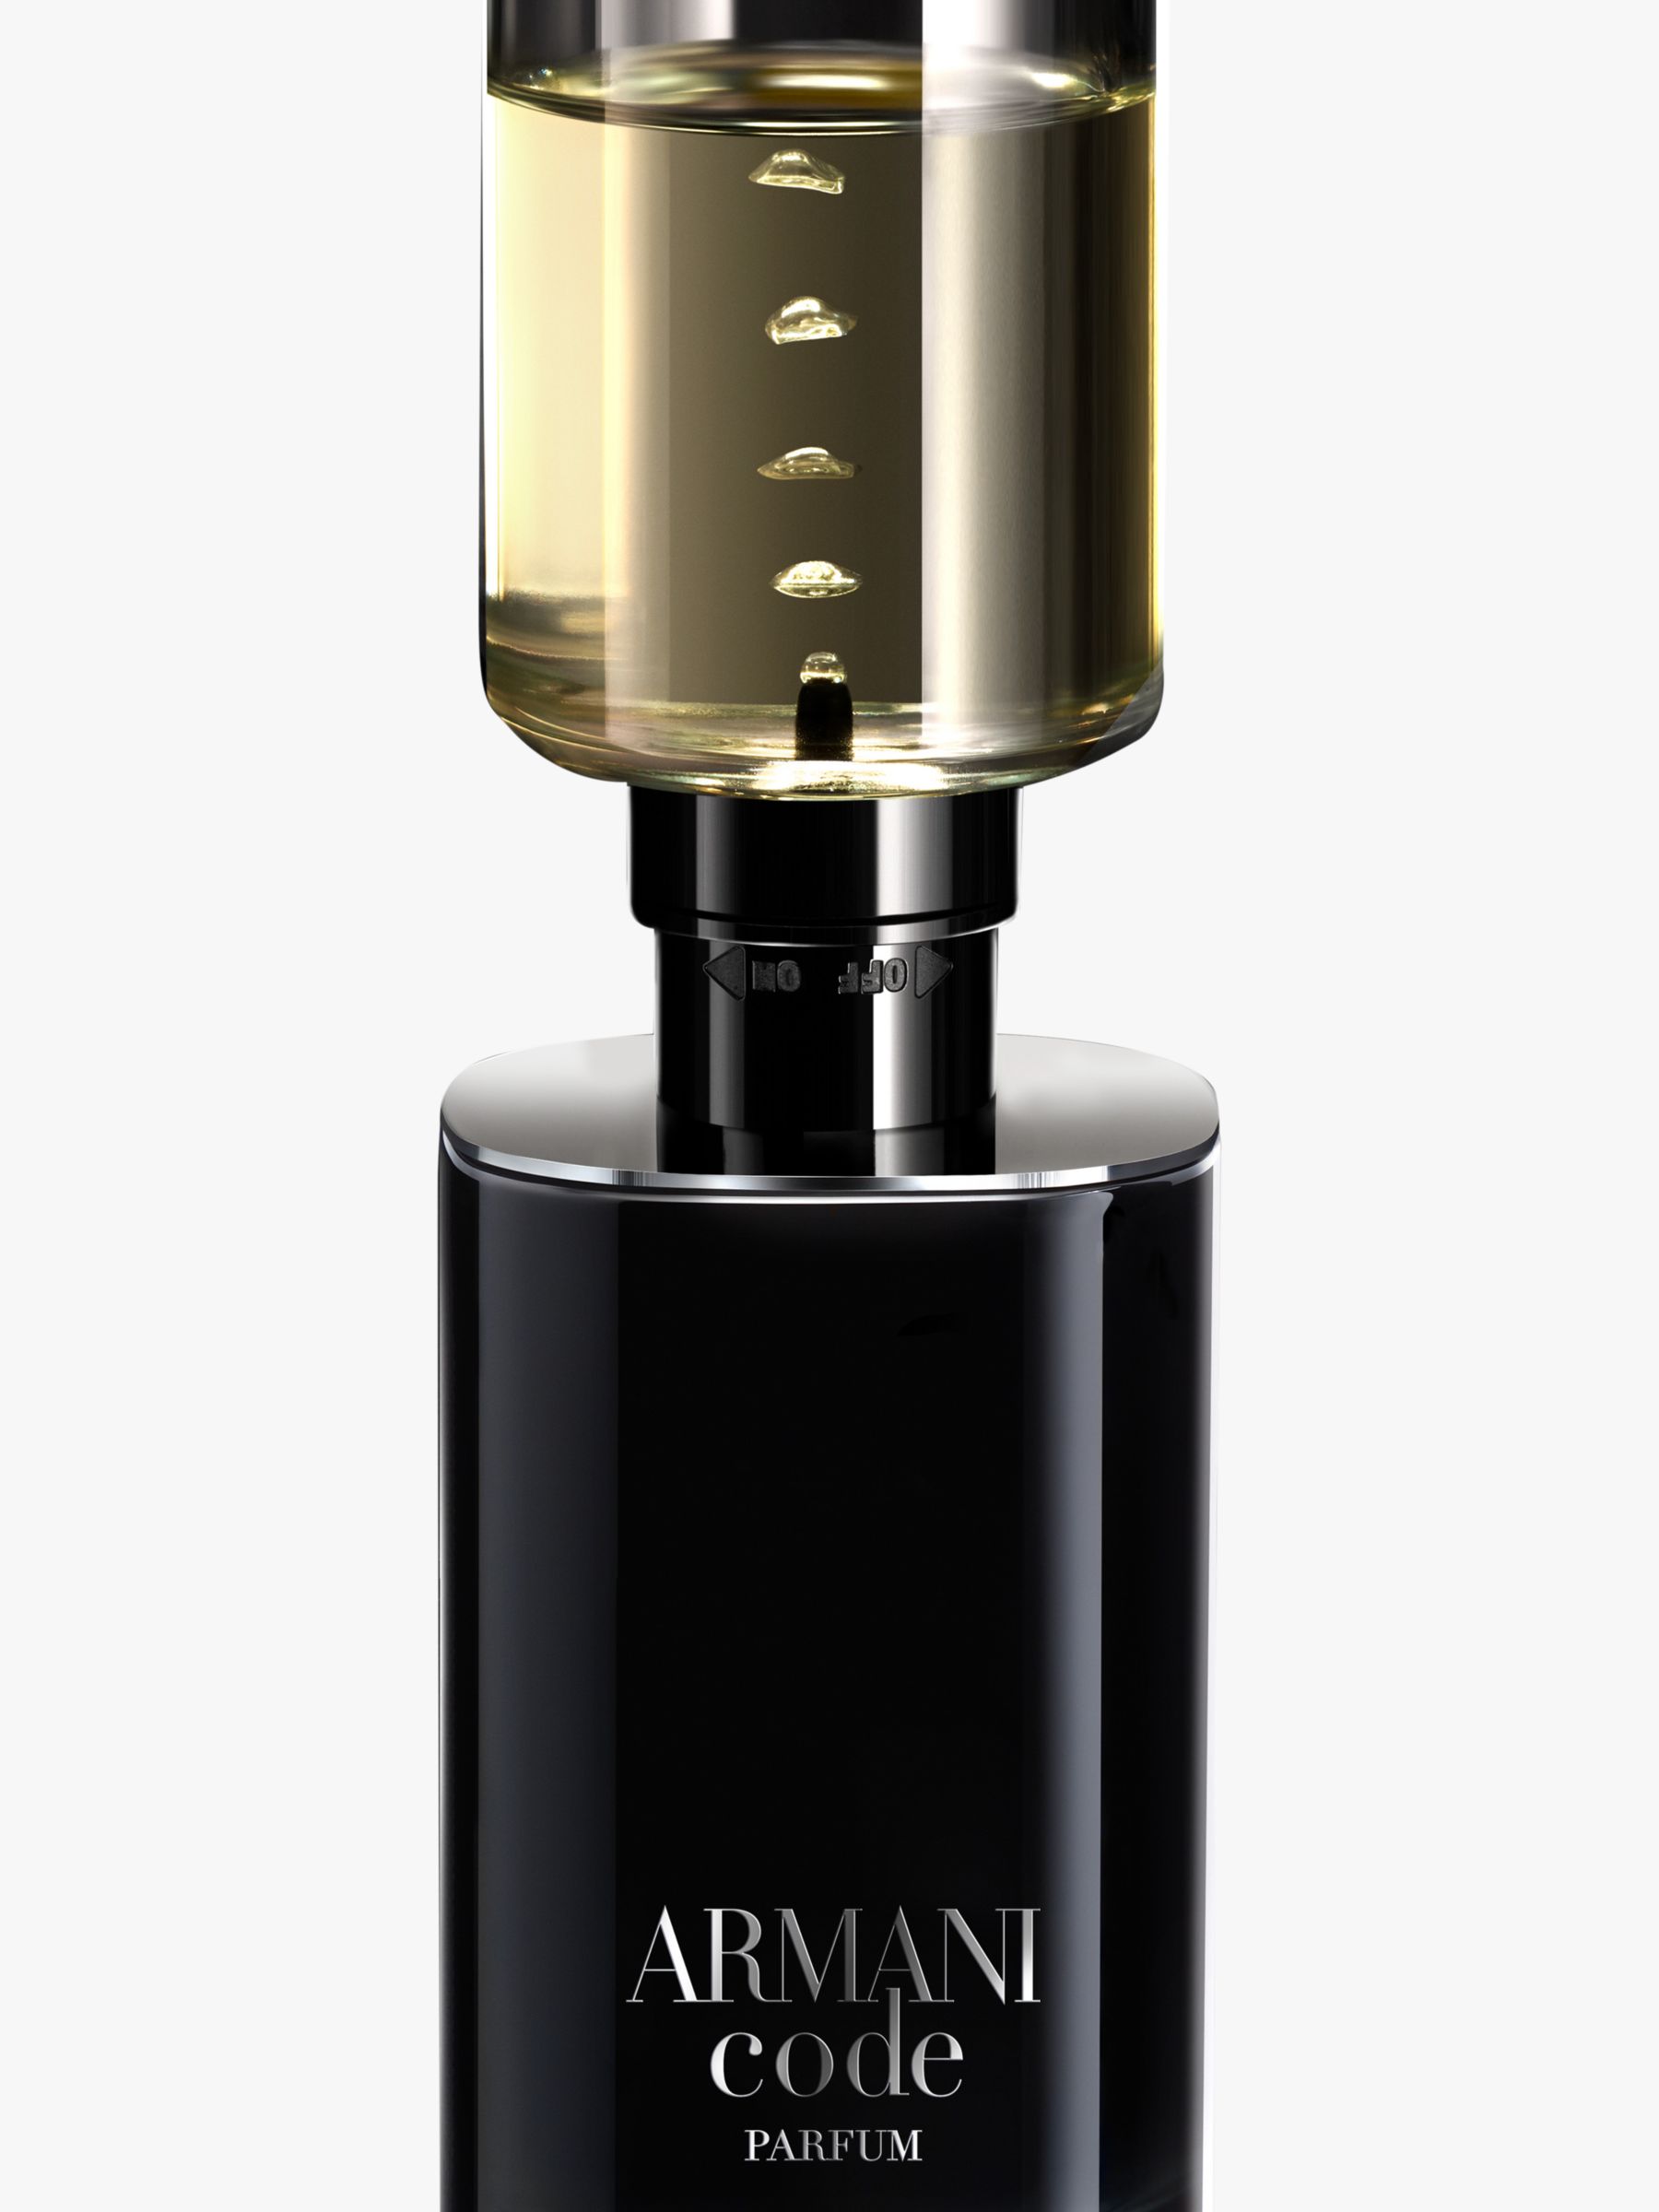 Giorgio Armani Code Le Parfum Eau de Parfum Refill, 150ml